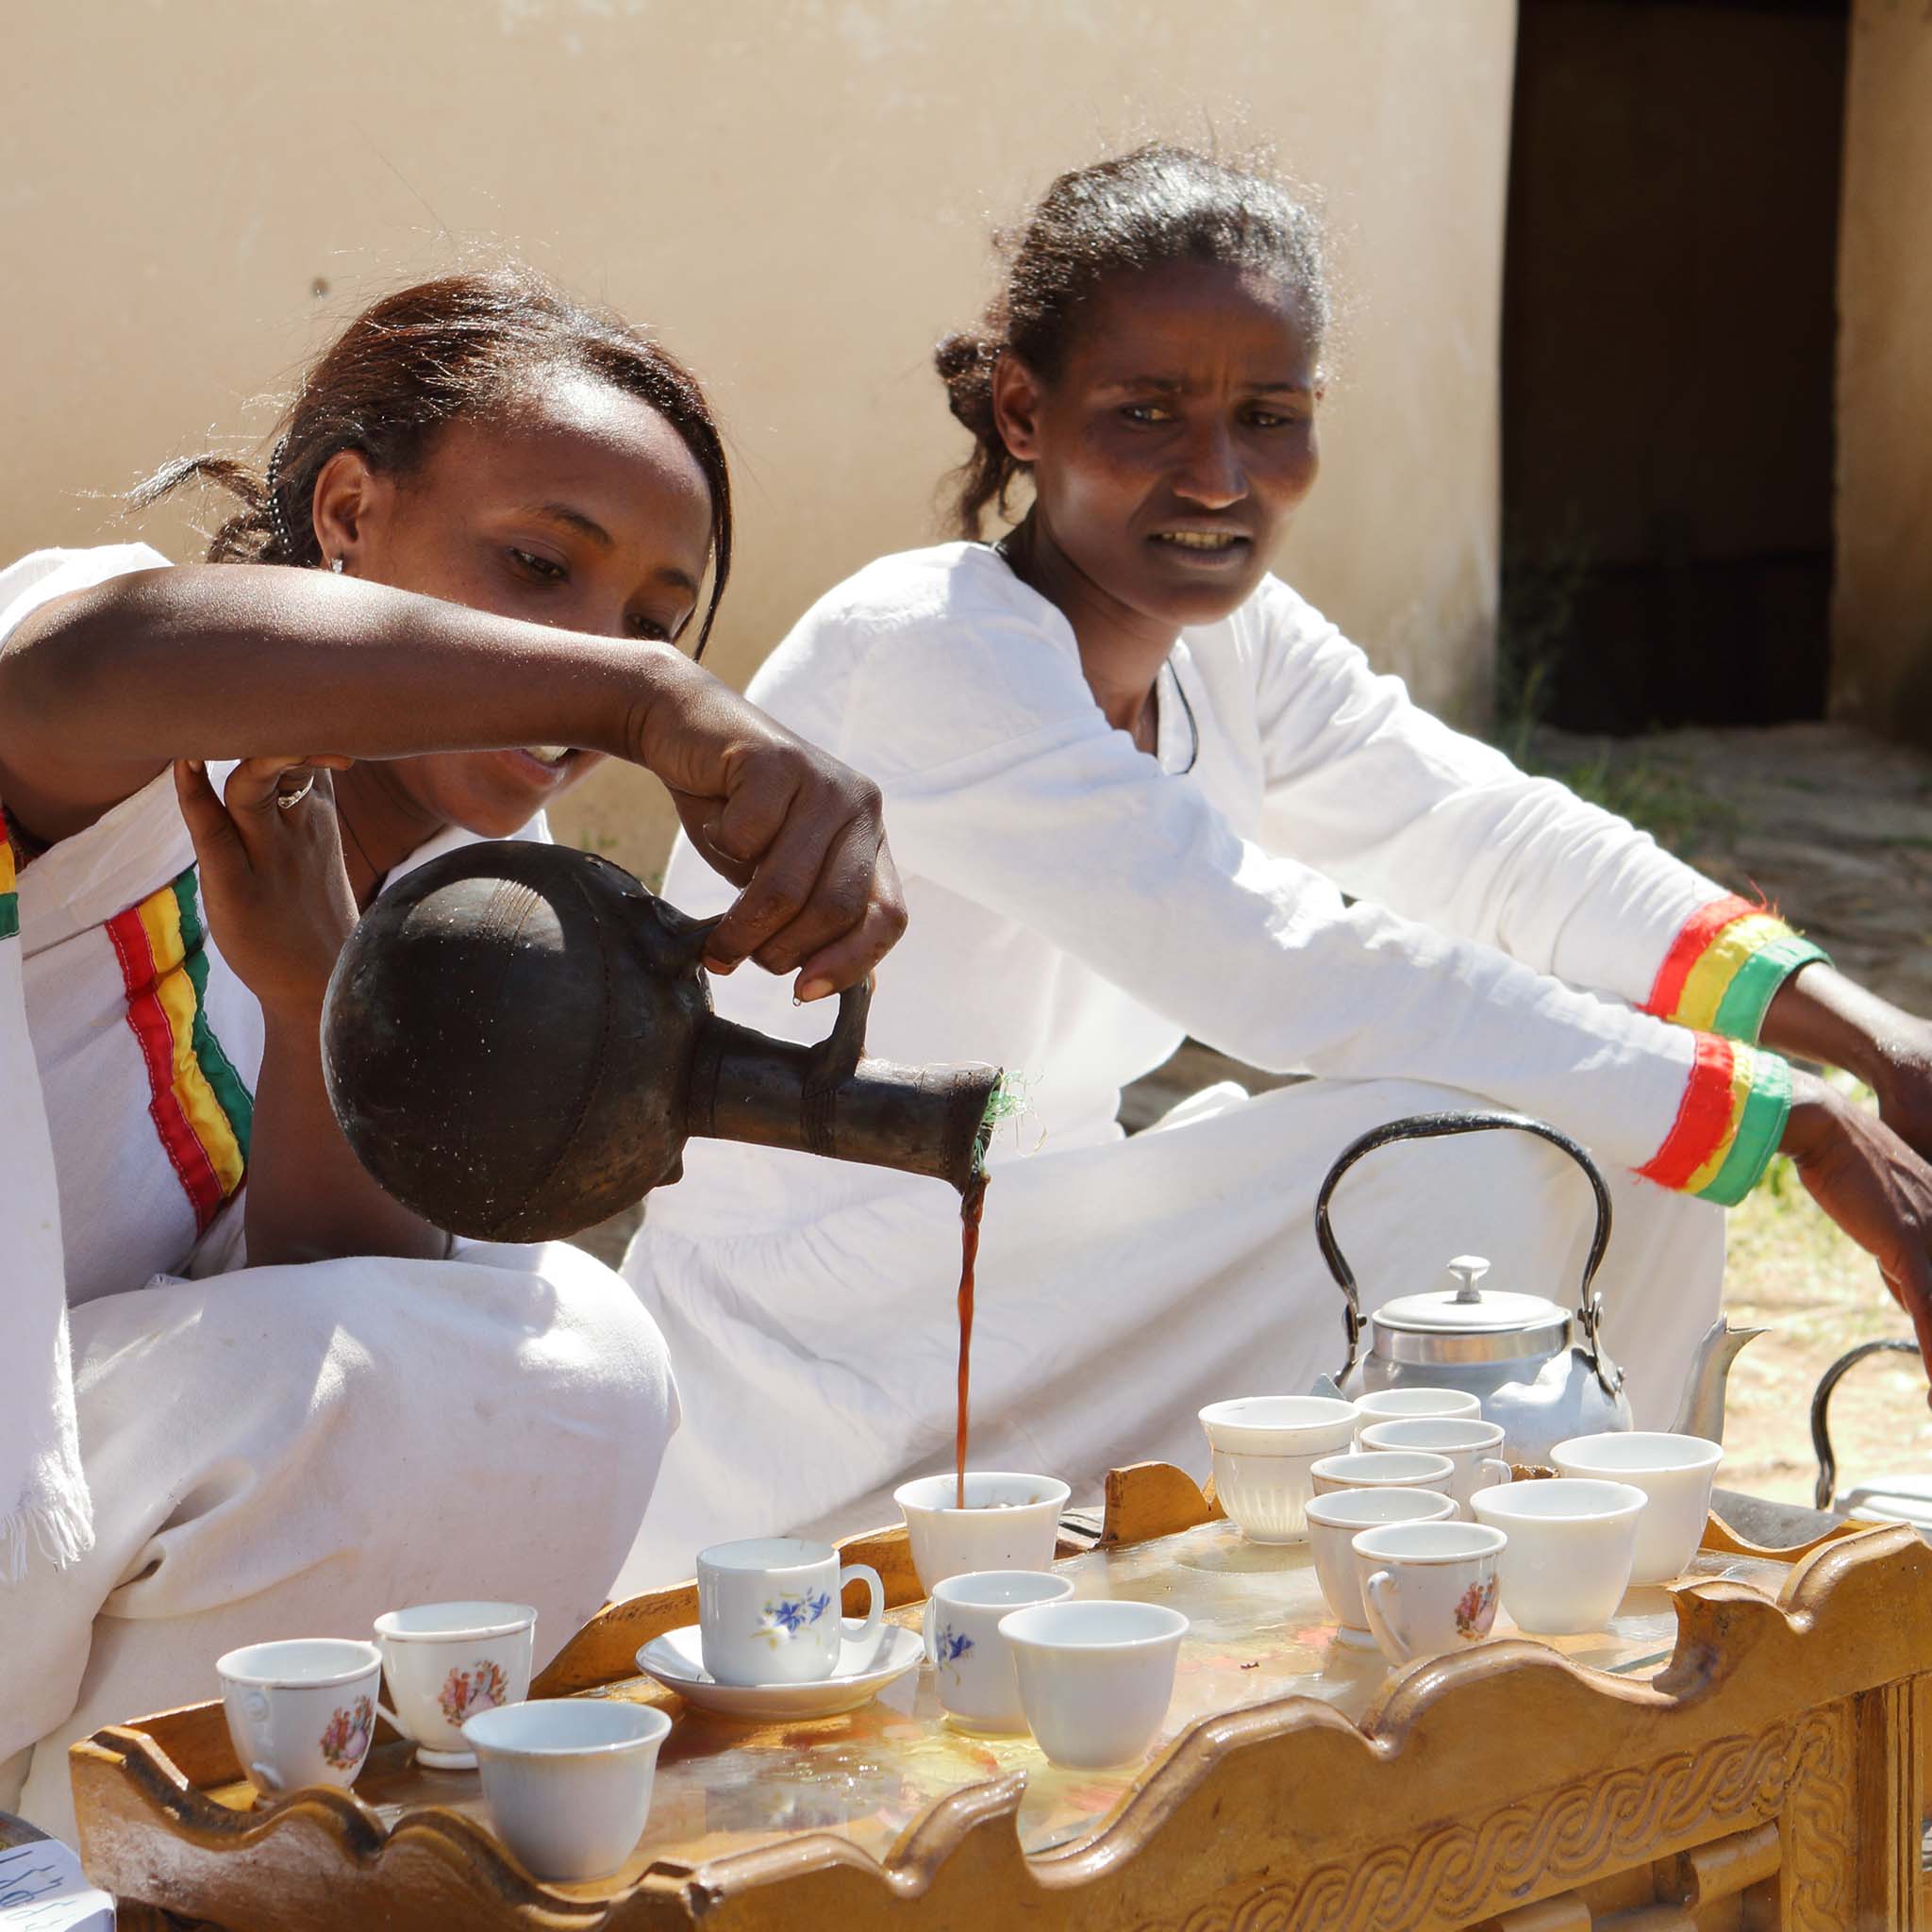 Ethiopia Harrar - Deep Blue - Jaho Coffee Roaster